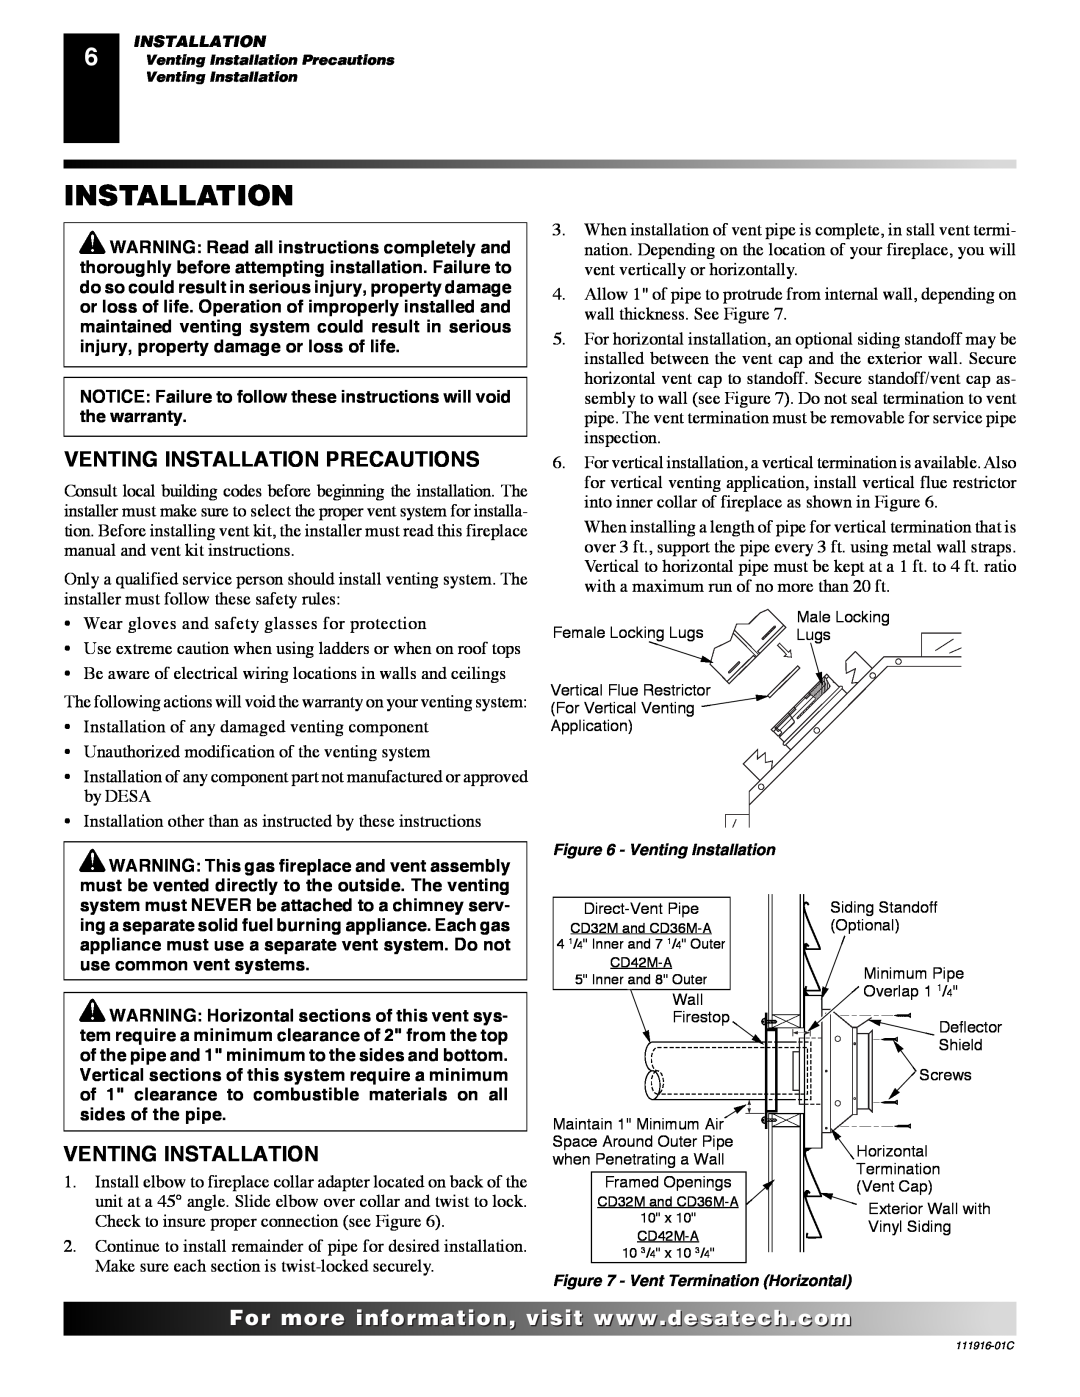 Desa CD32M (-1)(-2) installation manual Venting Installation Precautions 